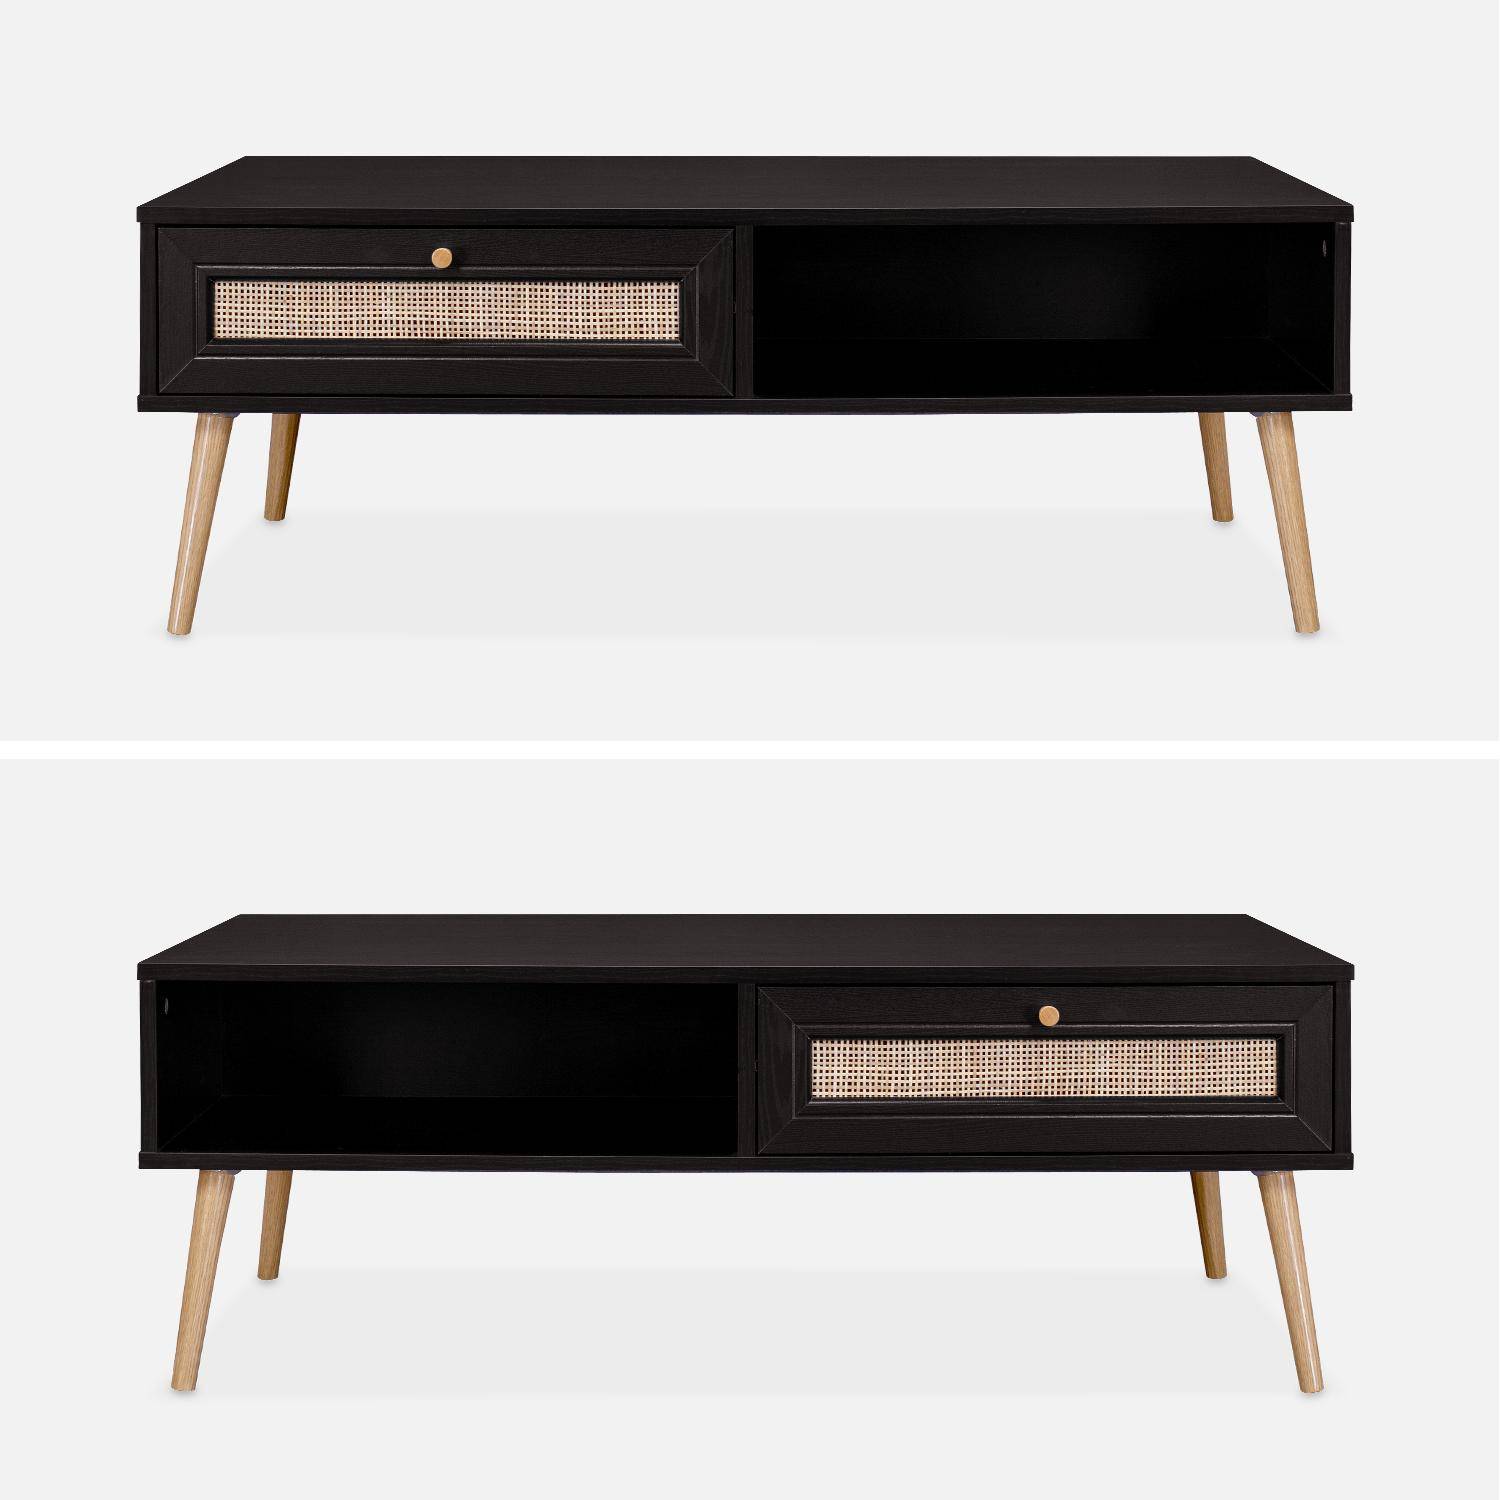  Wood and woven rattan coffee table with storage, 110x59x39cm, black, Boheme Photo3